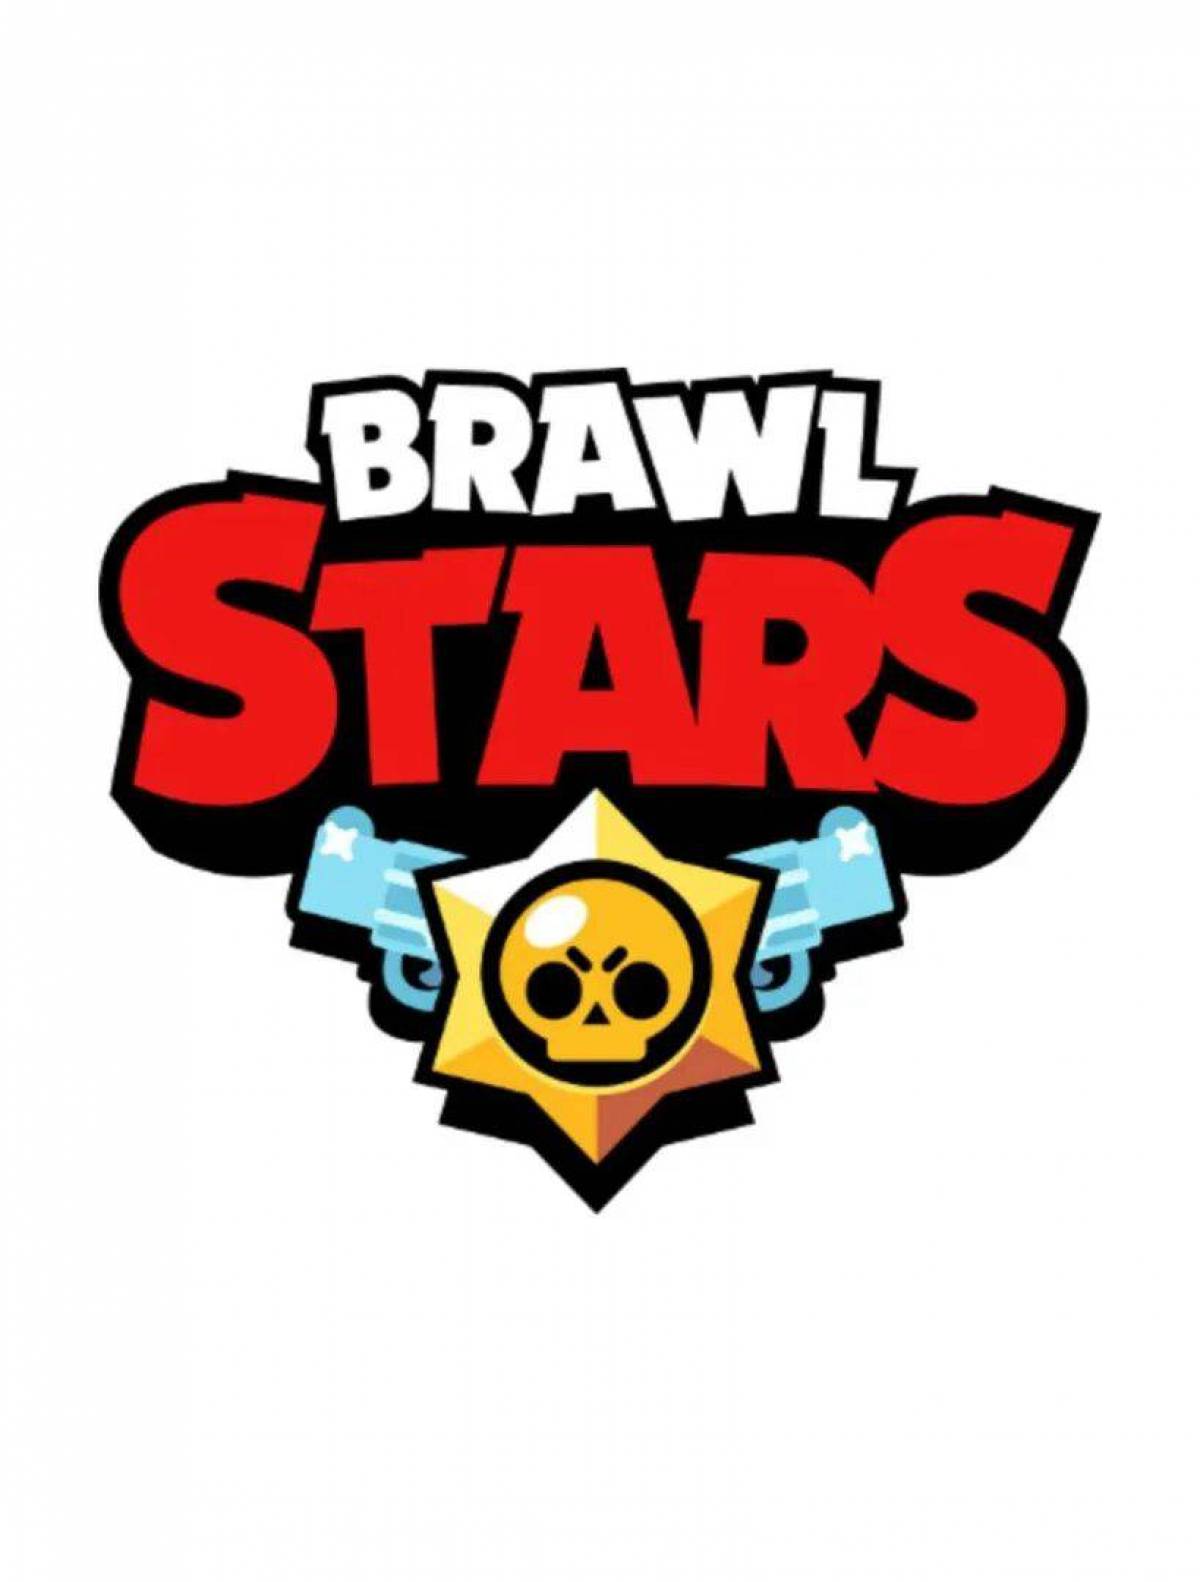 Brawl stars #36